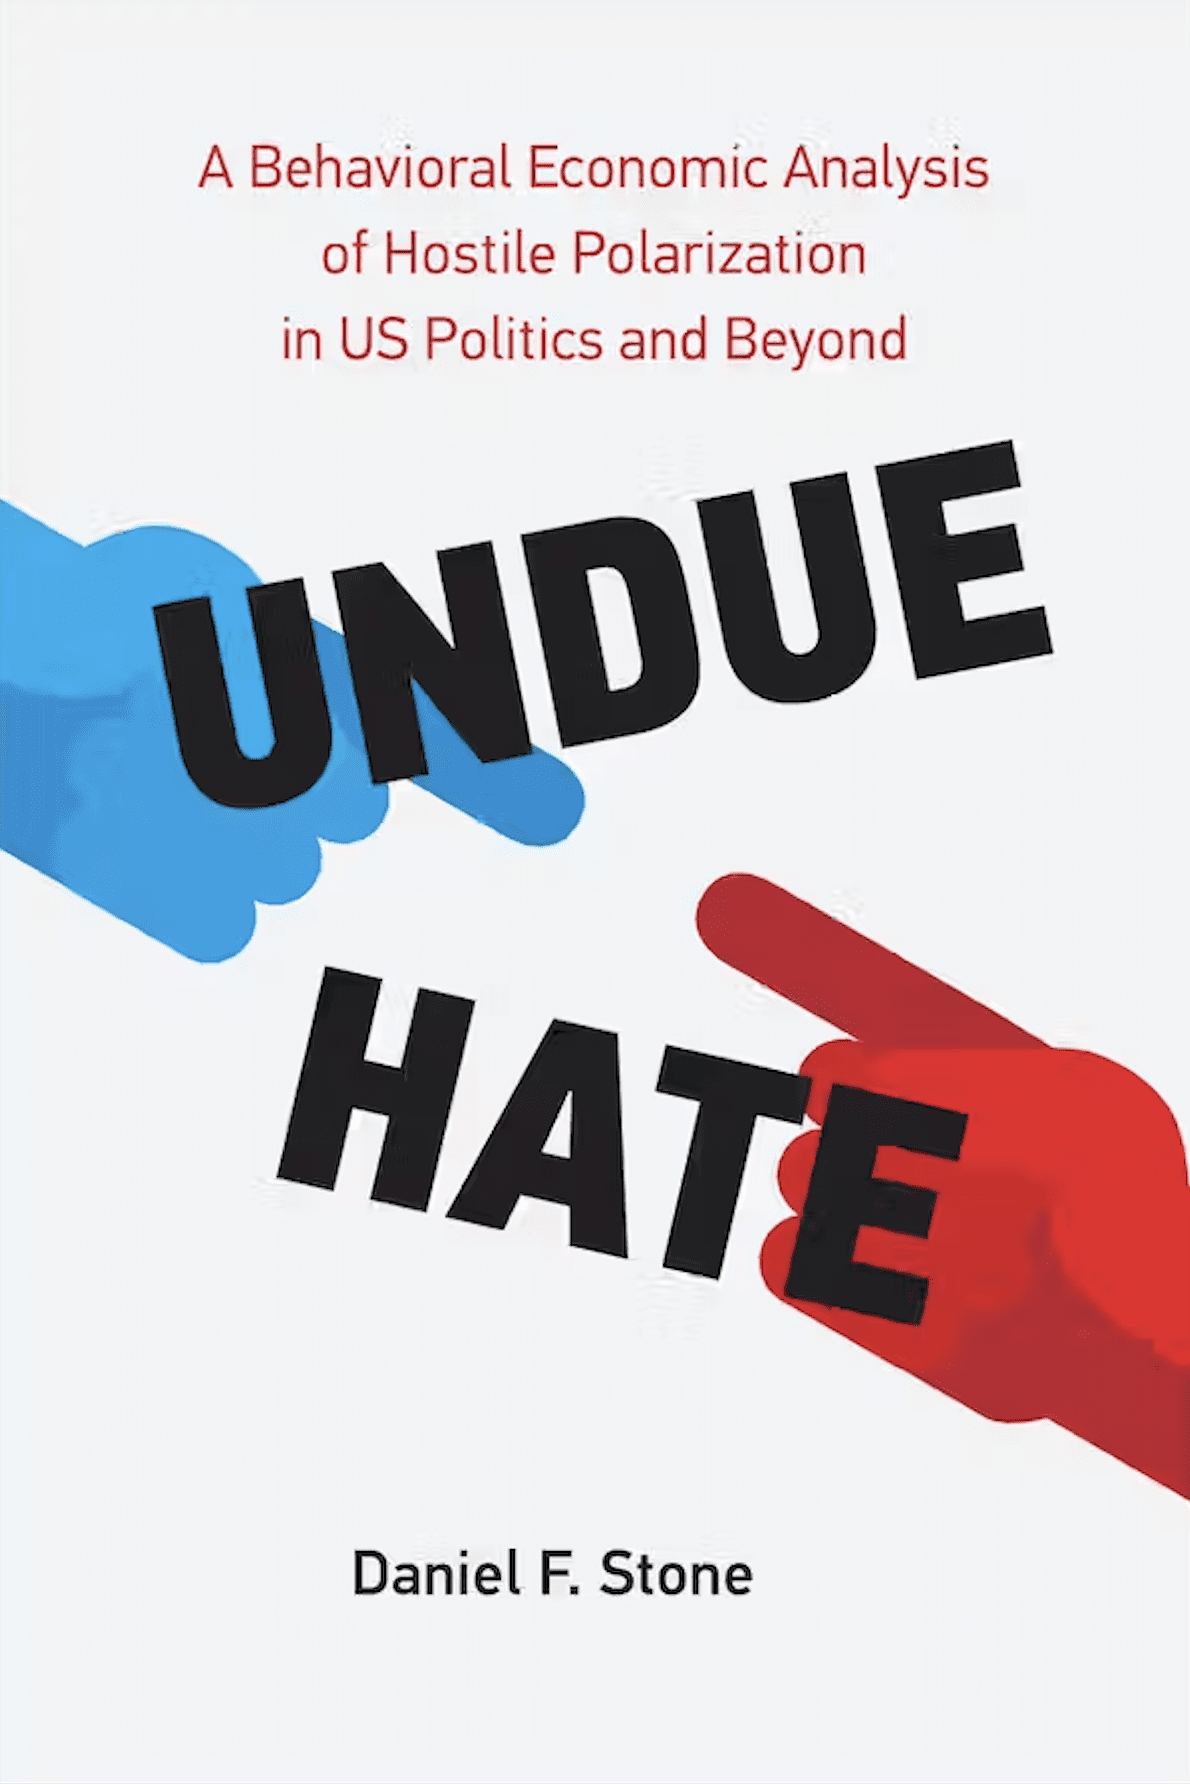 Dr. Daniel Stone ’08 publishes book titled Undue Hate